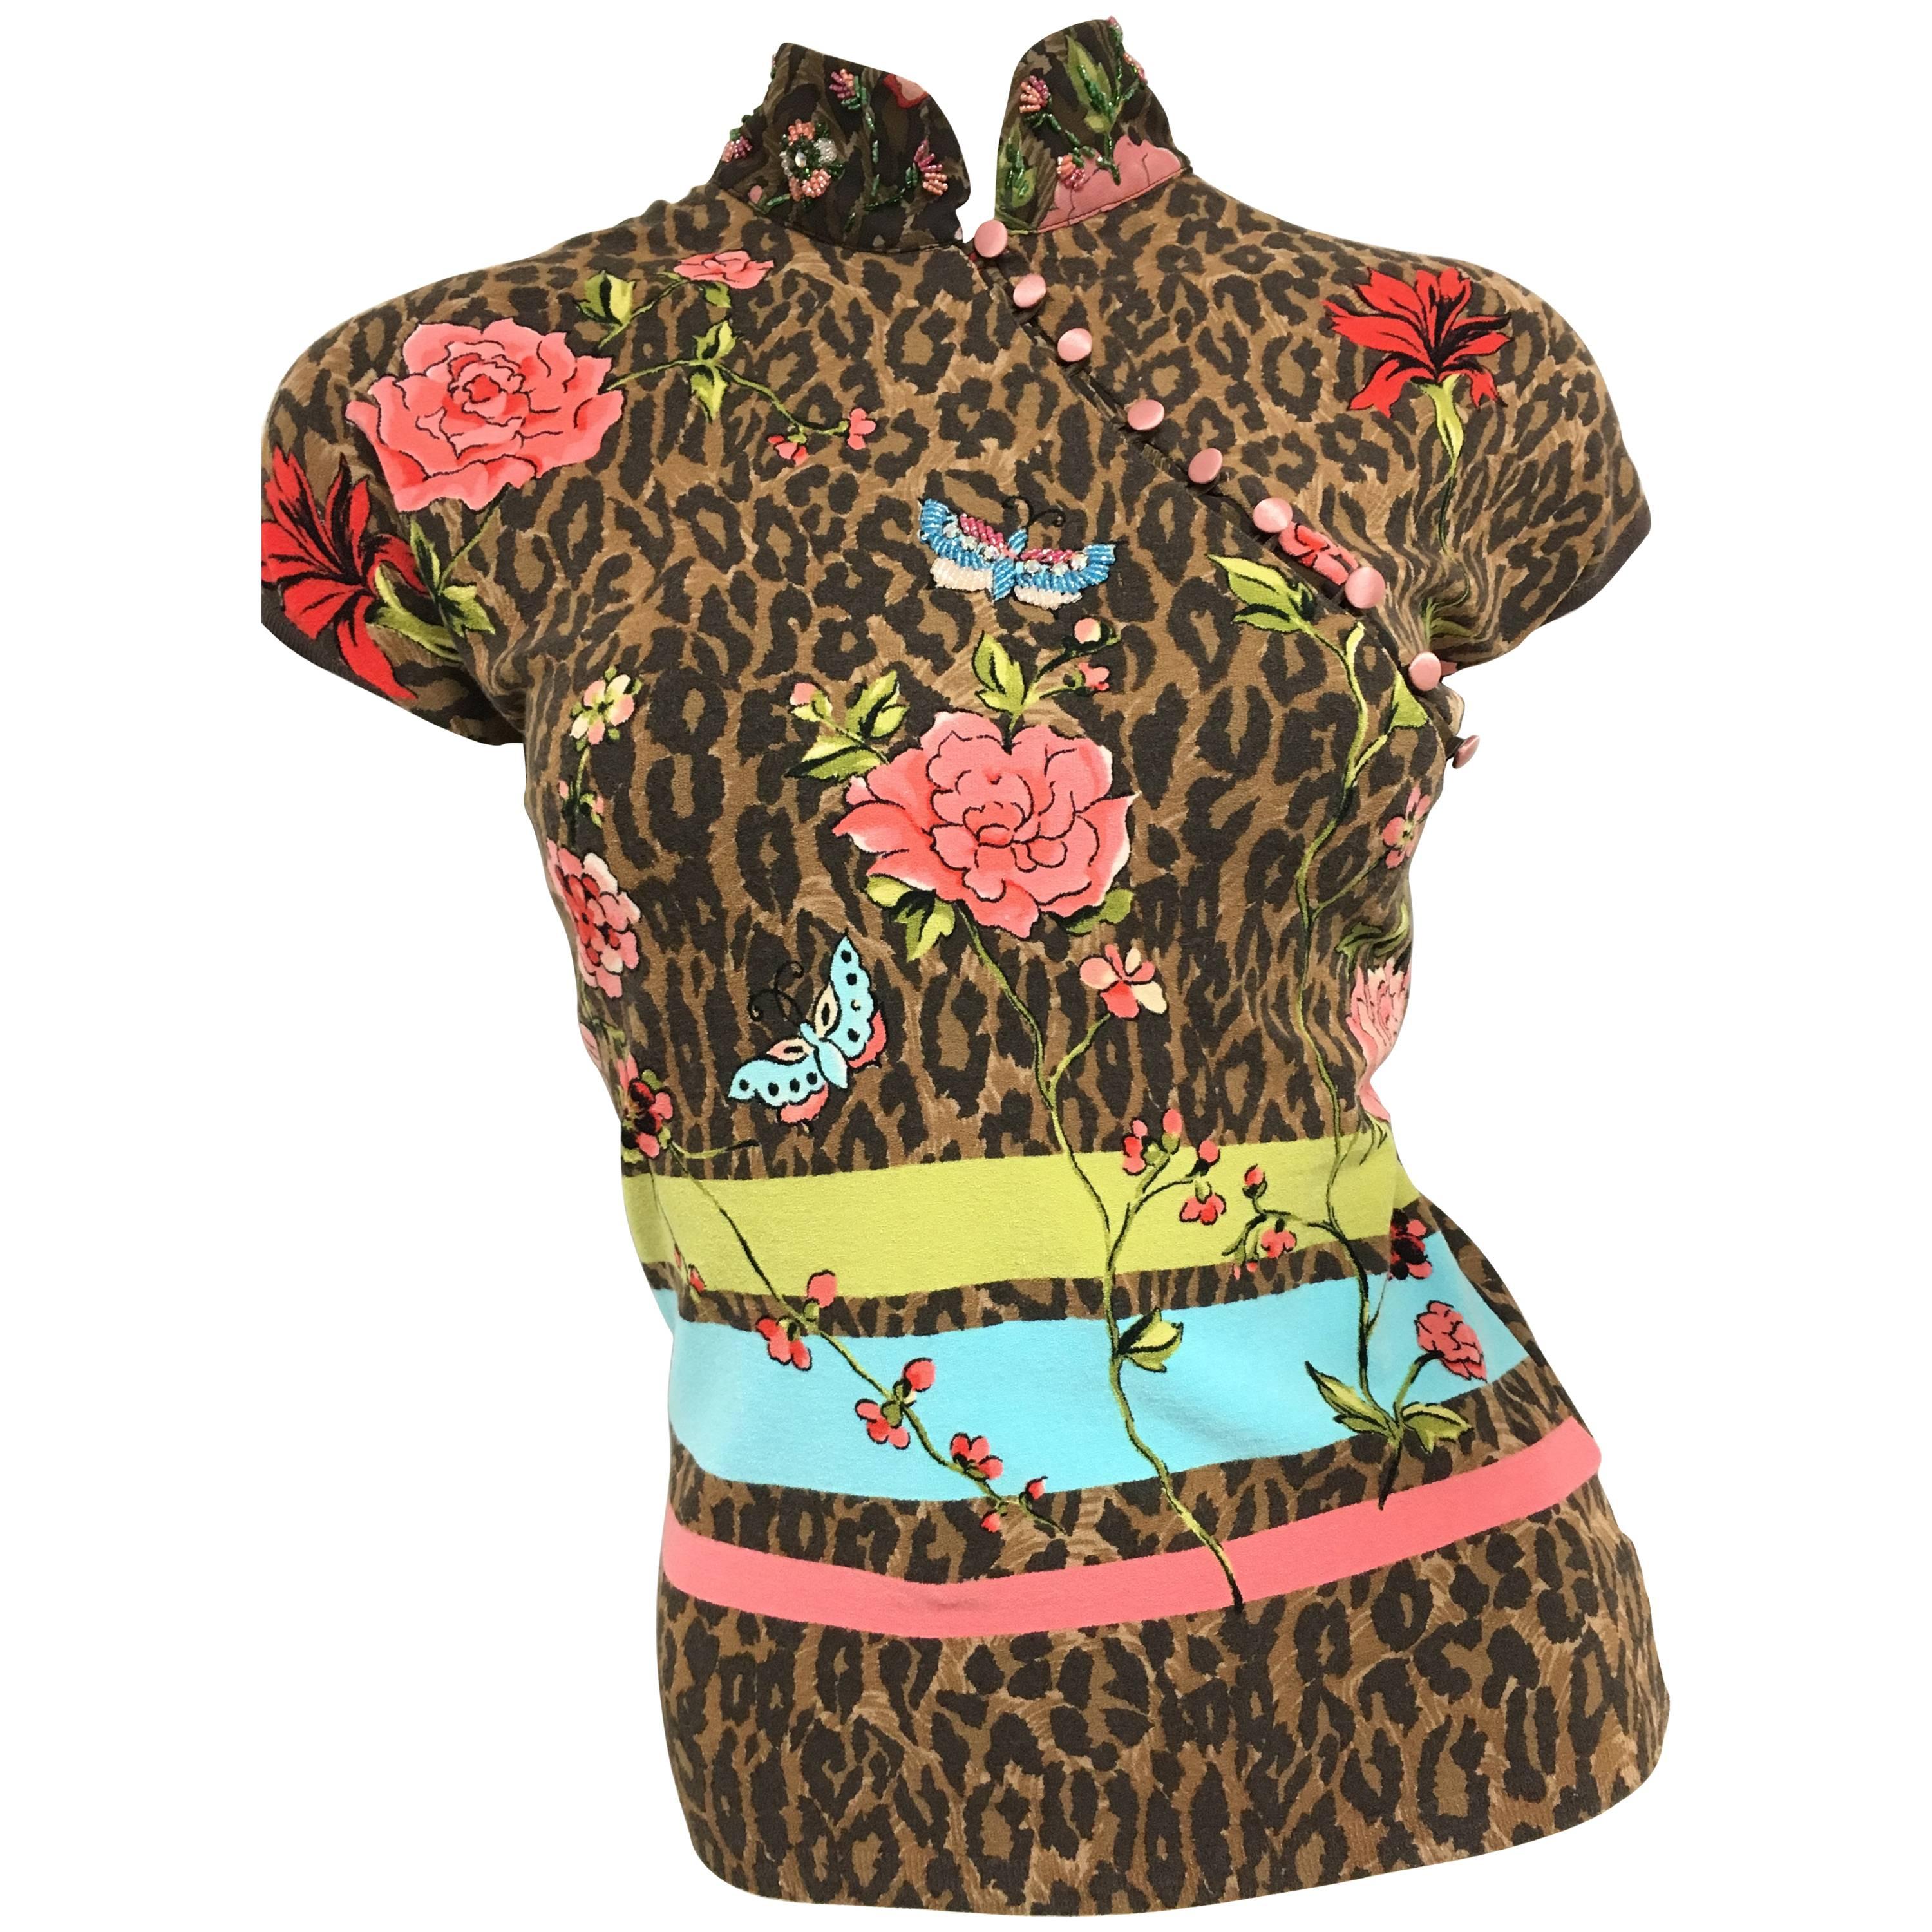 Gorgeous Blumarine Animal and Flower Print Embellished Shirt Top